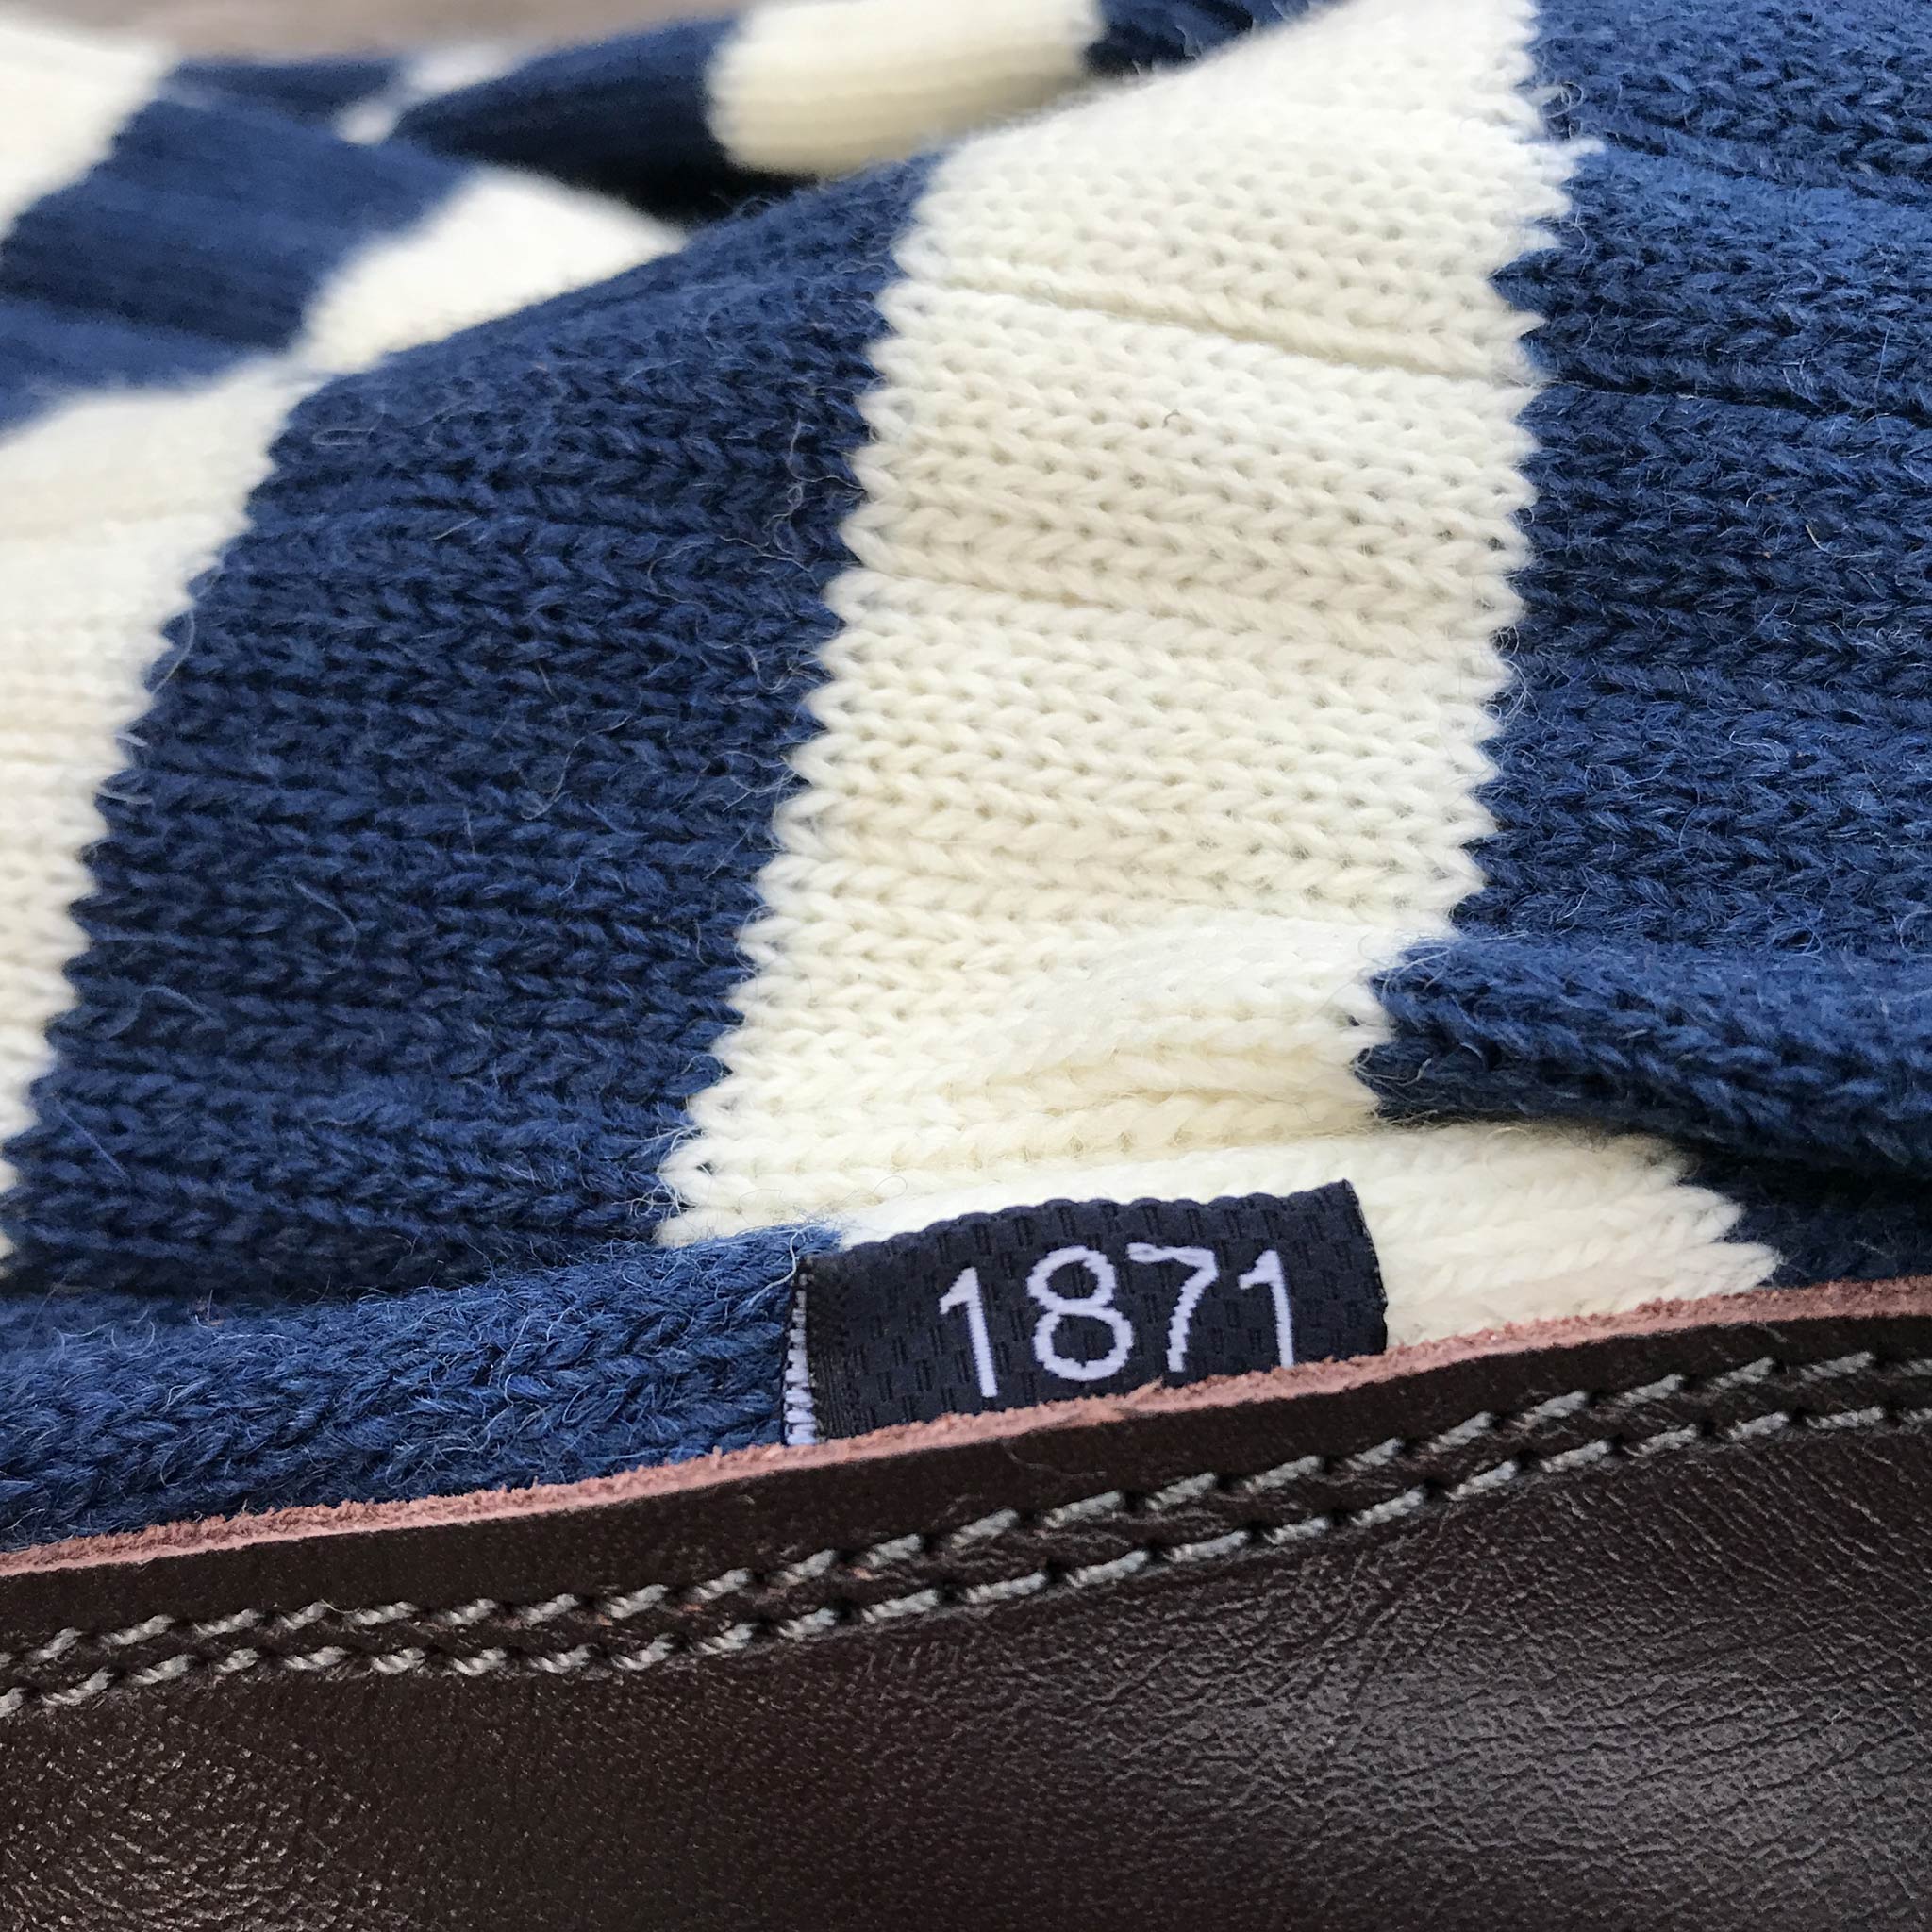 Slipper Sock blue and white stripe - close-up